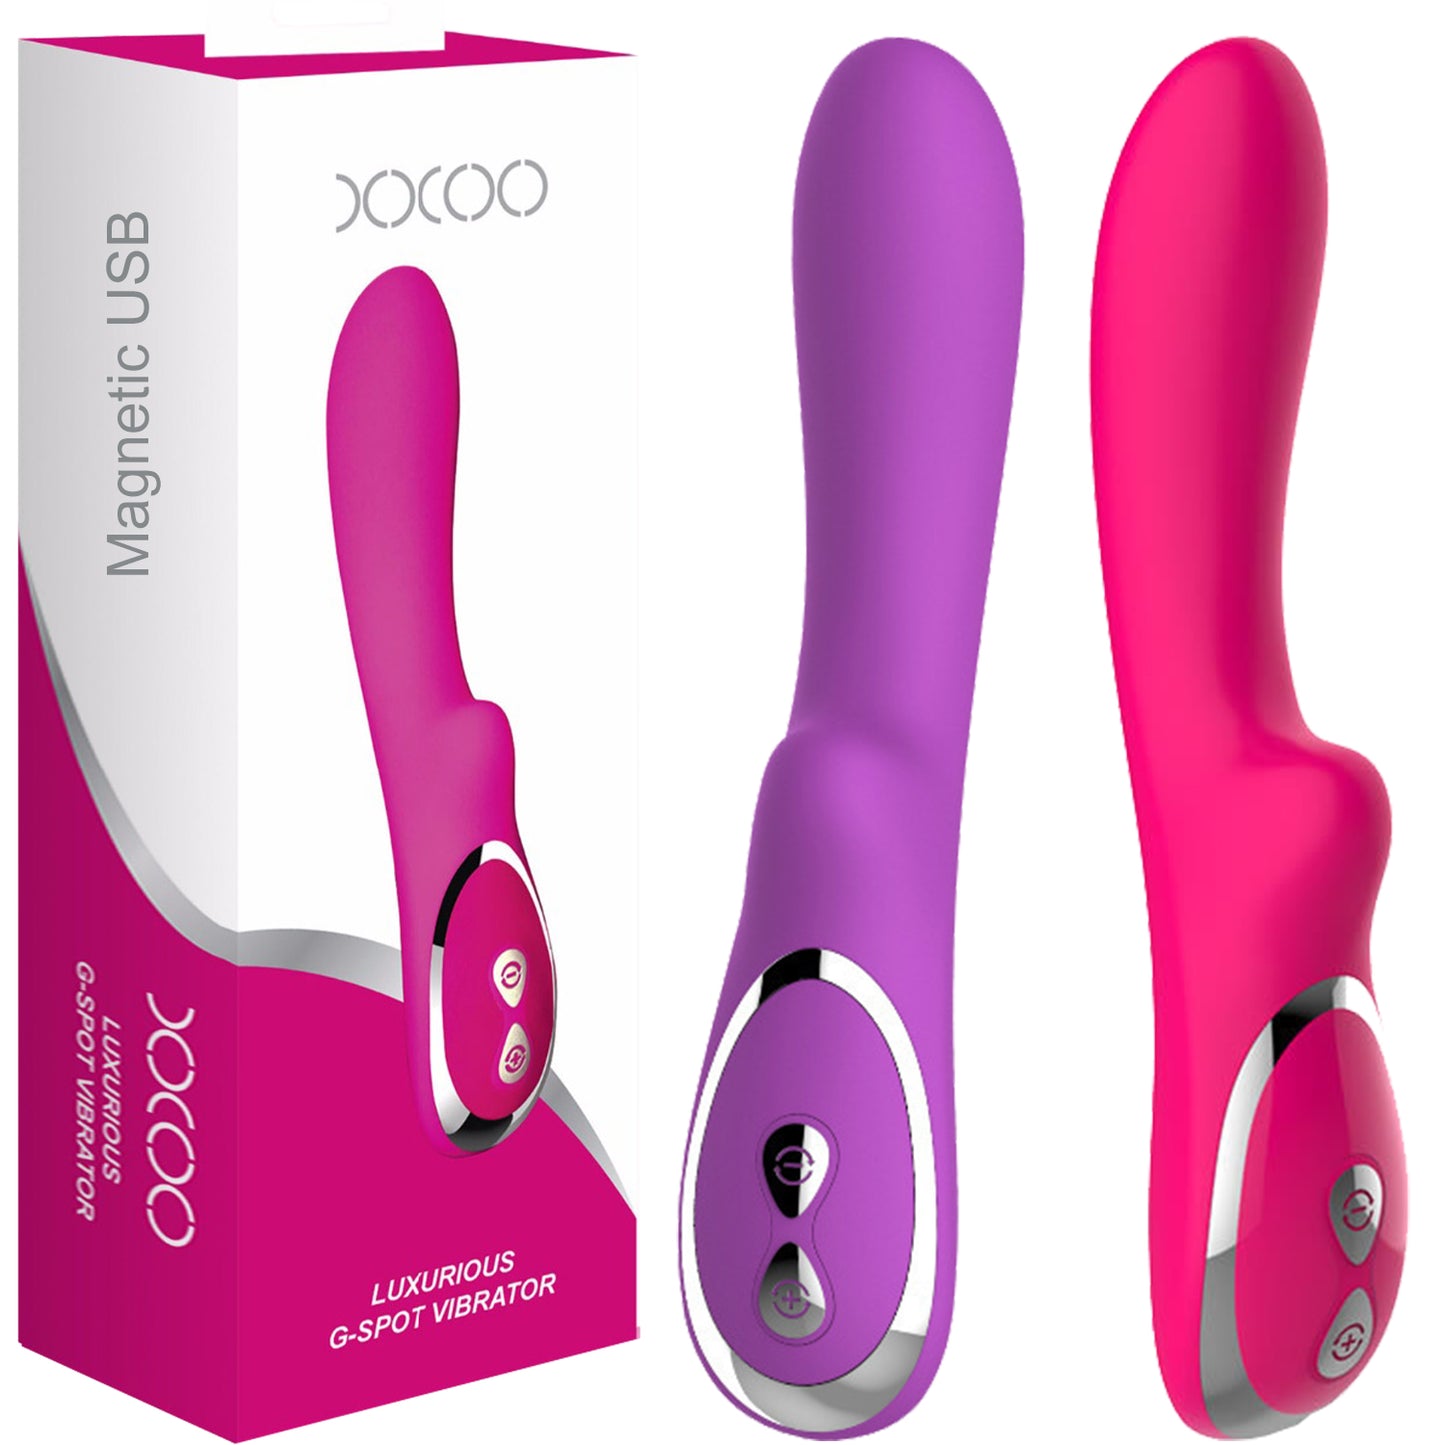 XXOO G-Spot Vibrator Flexible Rabbit Magnetic USB Rechargeable Female Sex Toy